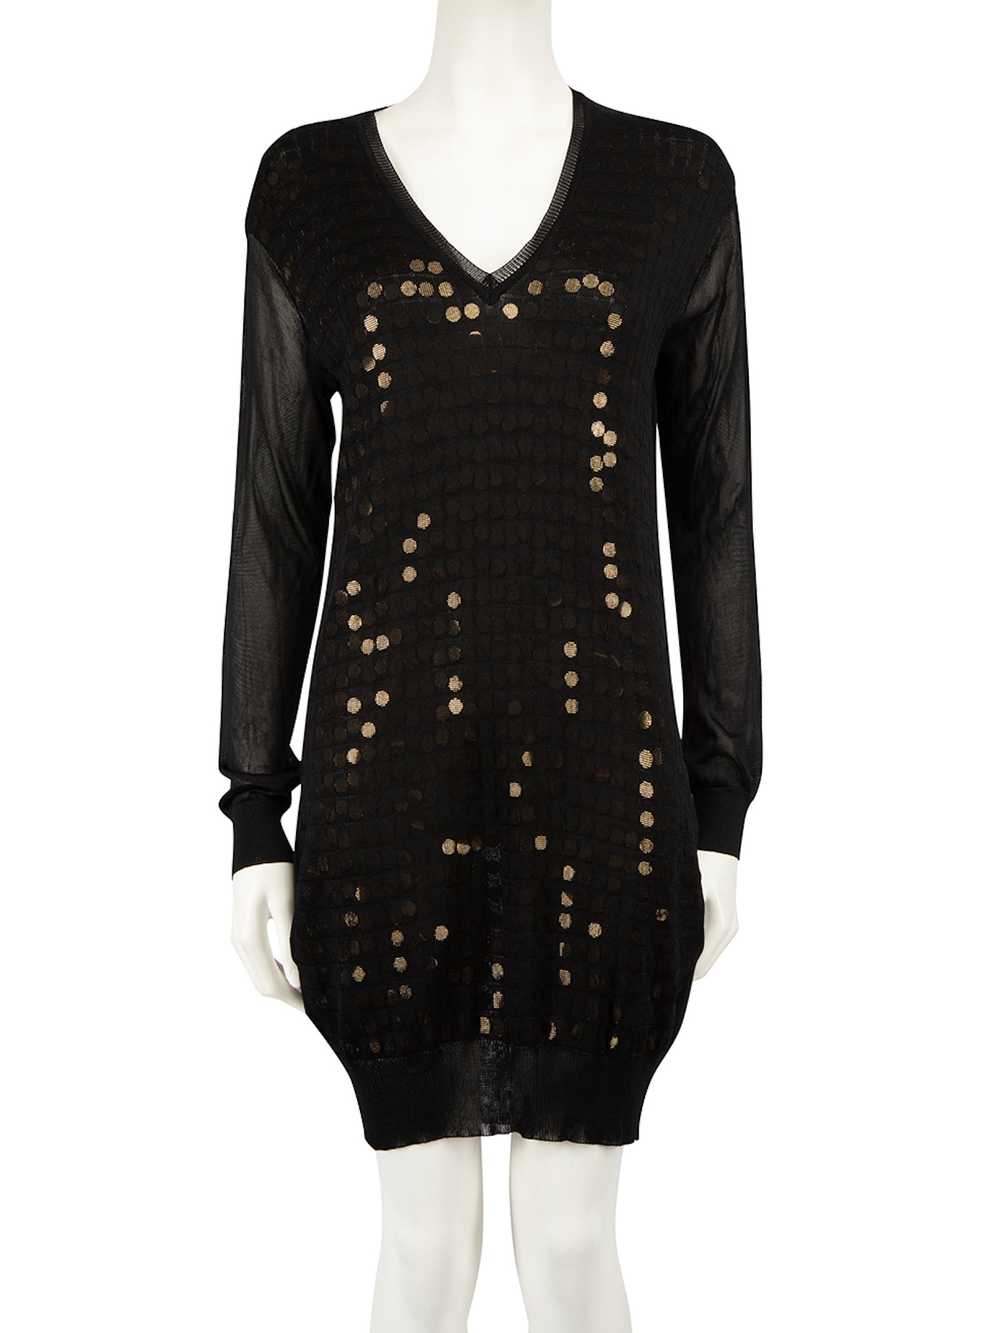 Stella McCartney Black Sequin Knit Jumper Dress - image 1